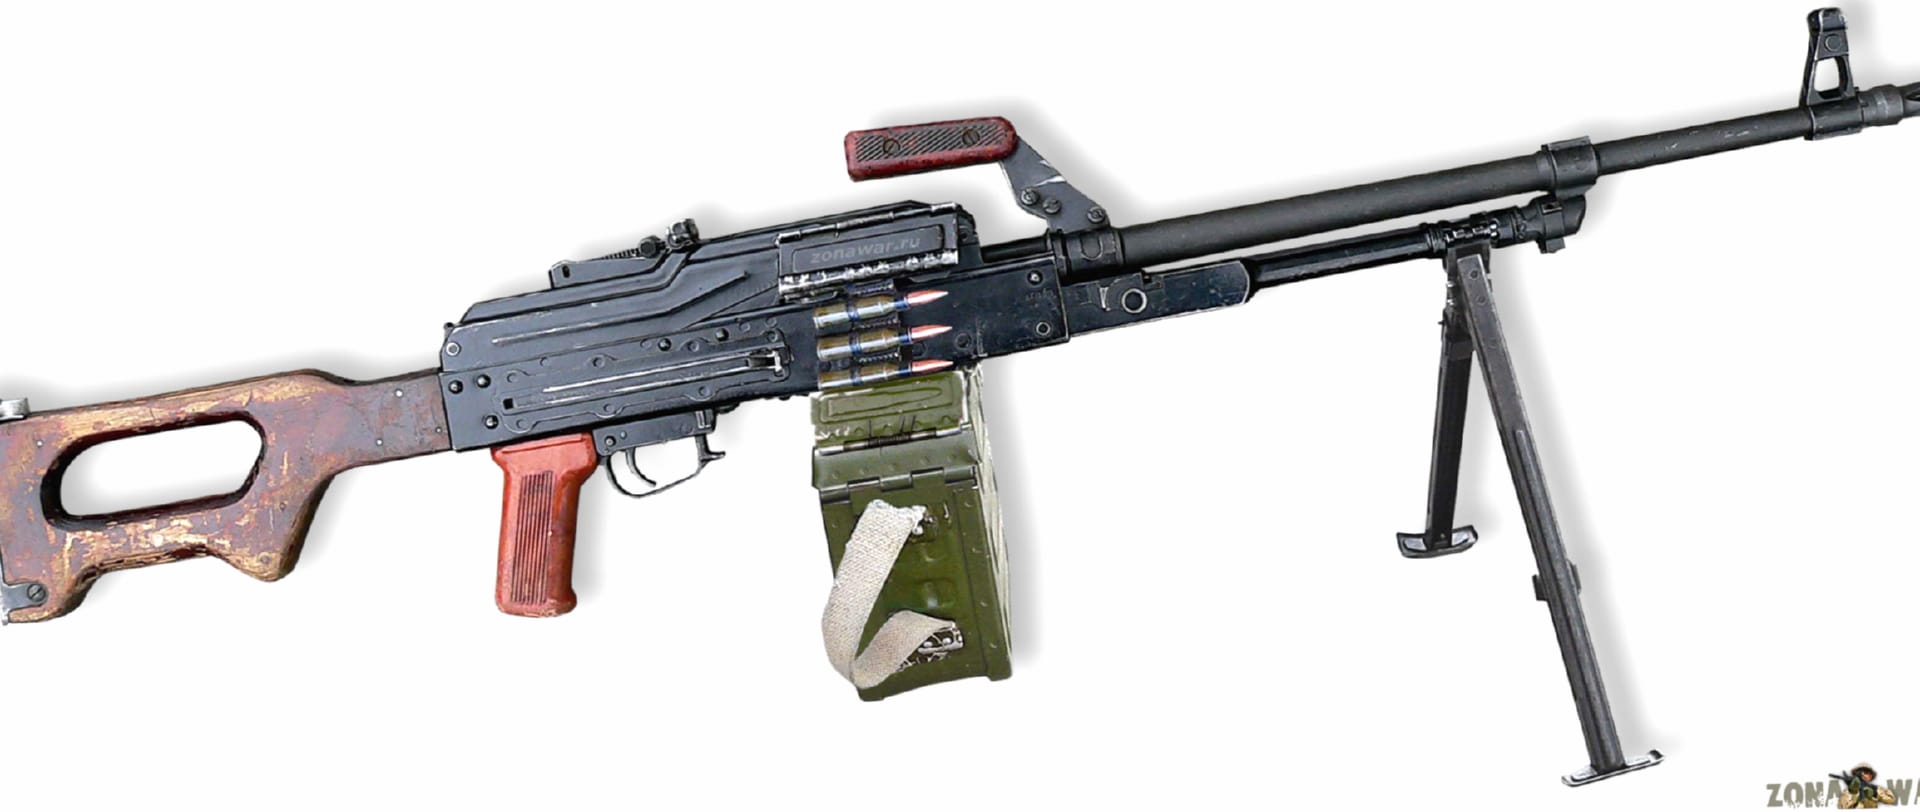 Kalashnikov Pk Rifle at 1152 x 864 size wallpapers HD quality